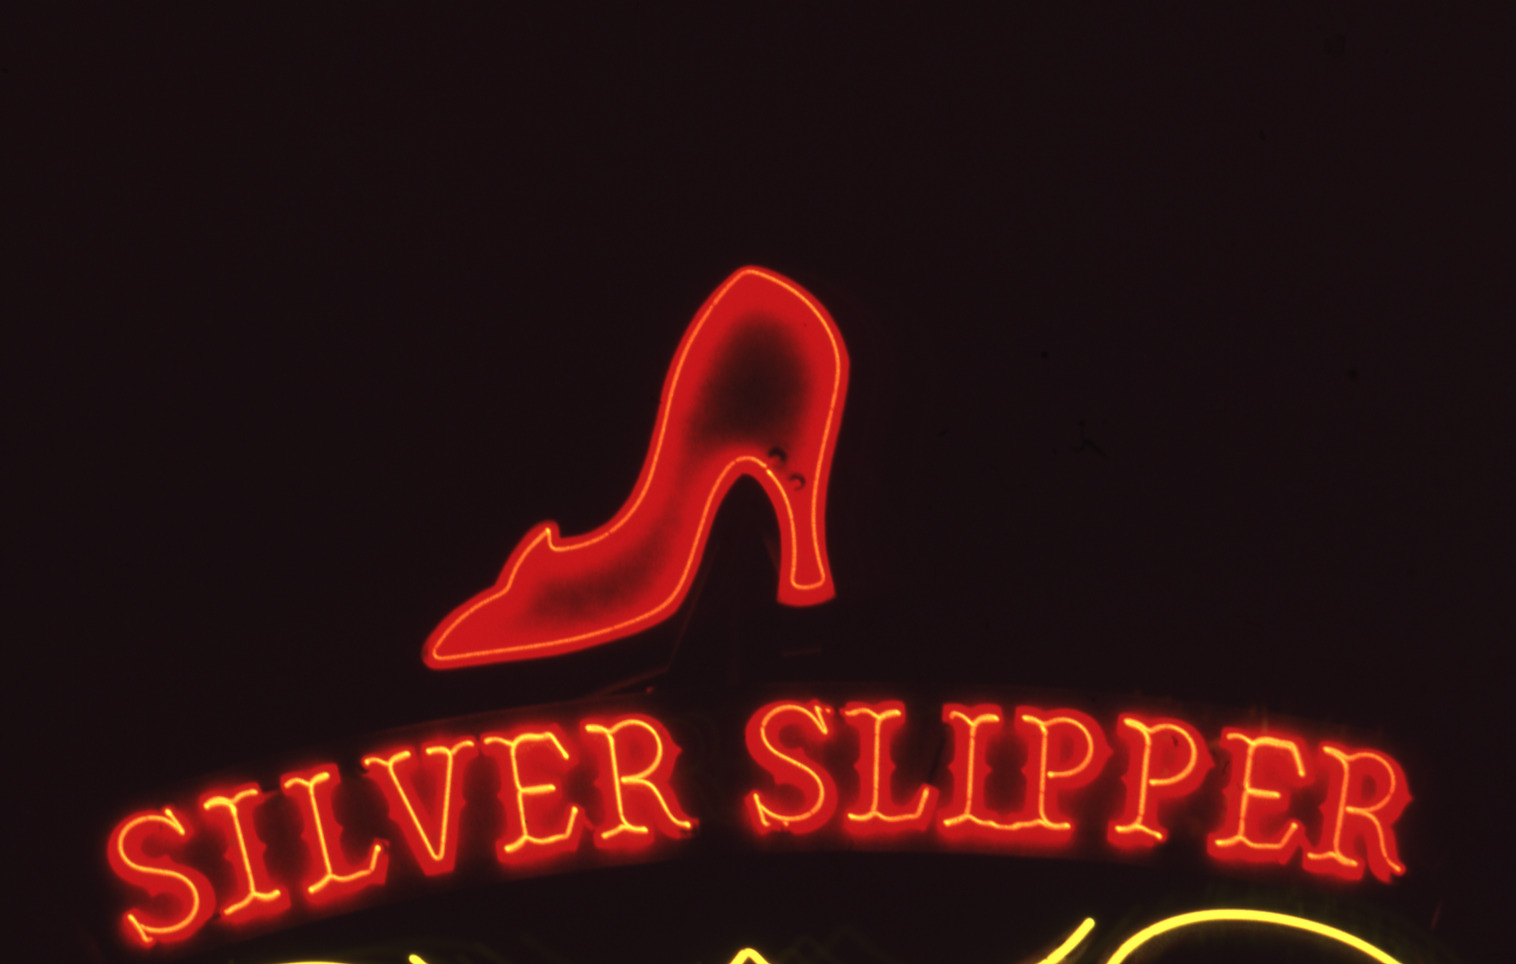 Silver Slipper Casino sign, Las Vegas, Nevada: photographic print